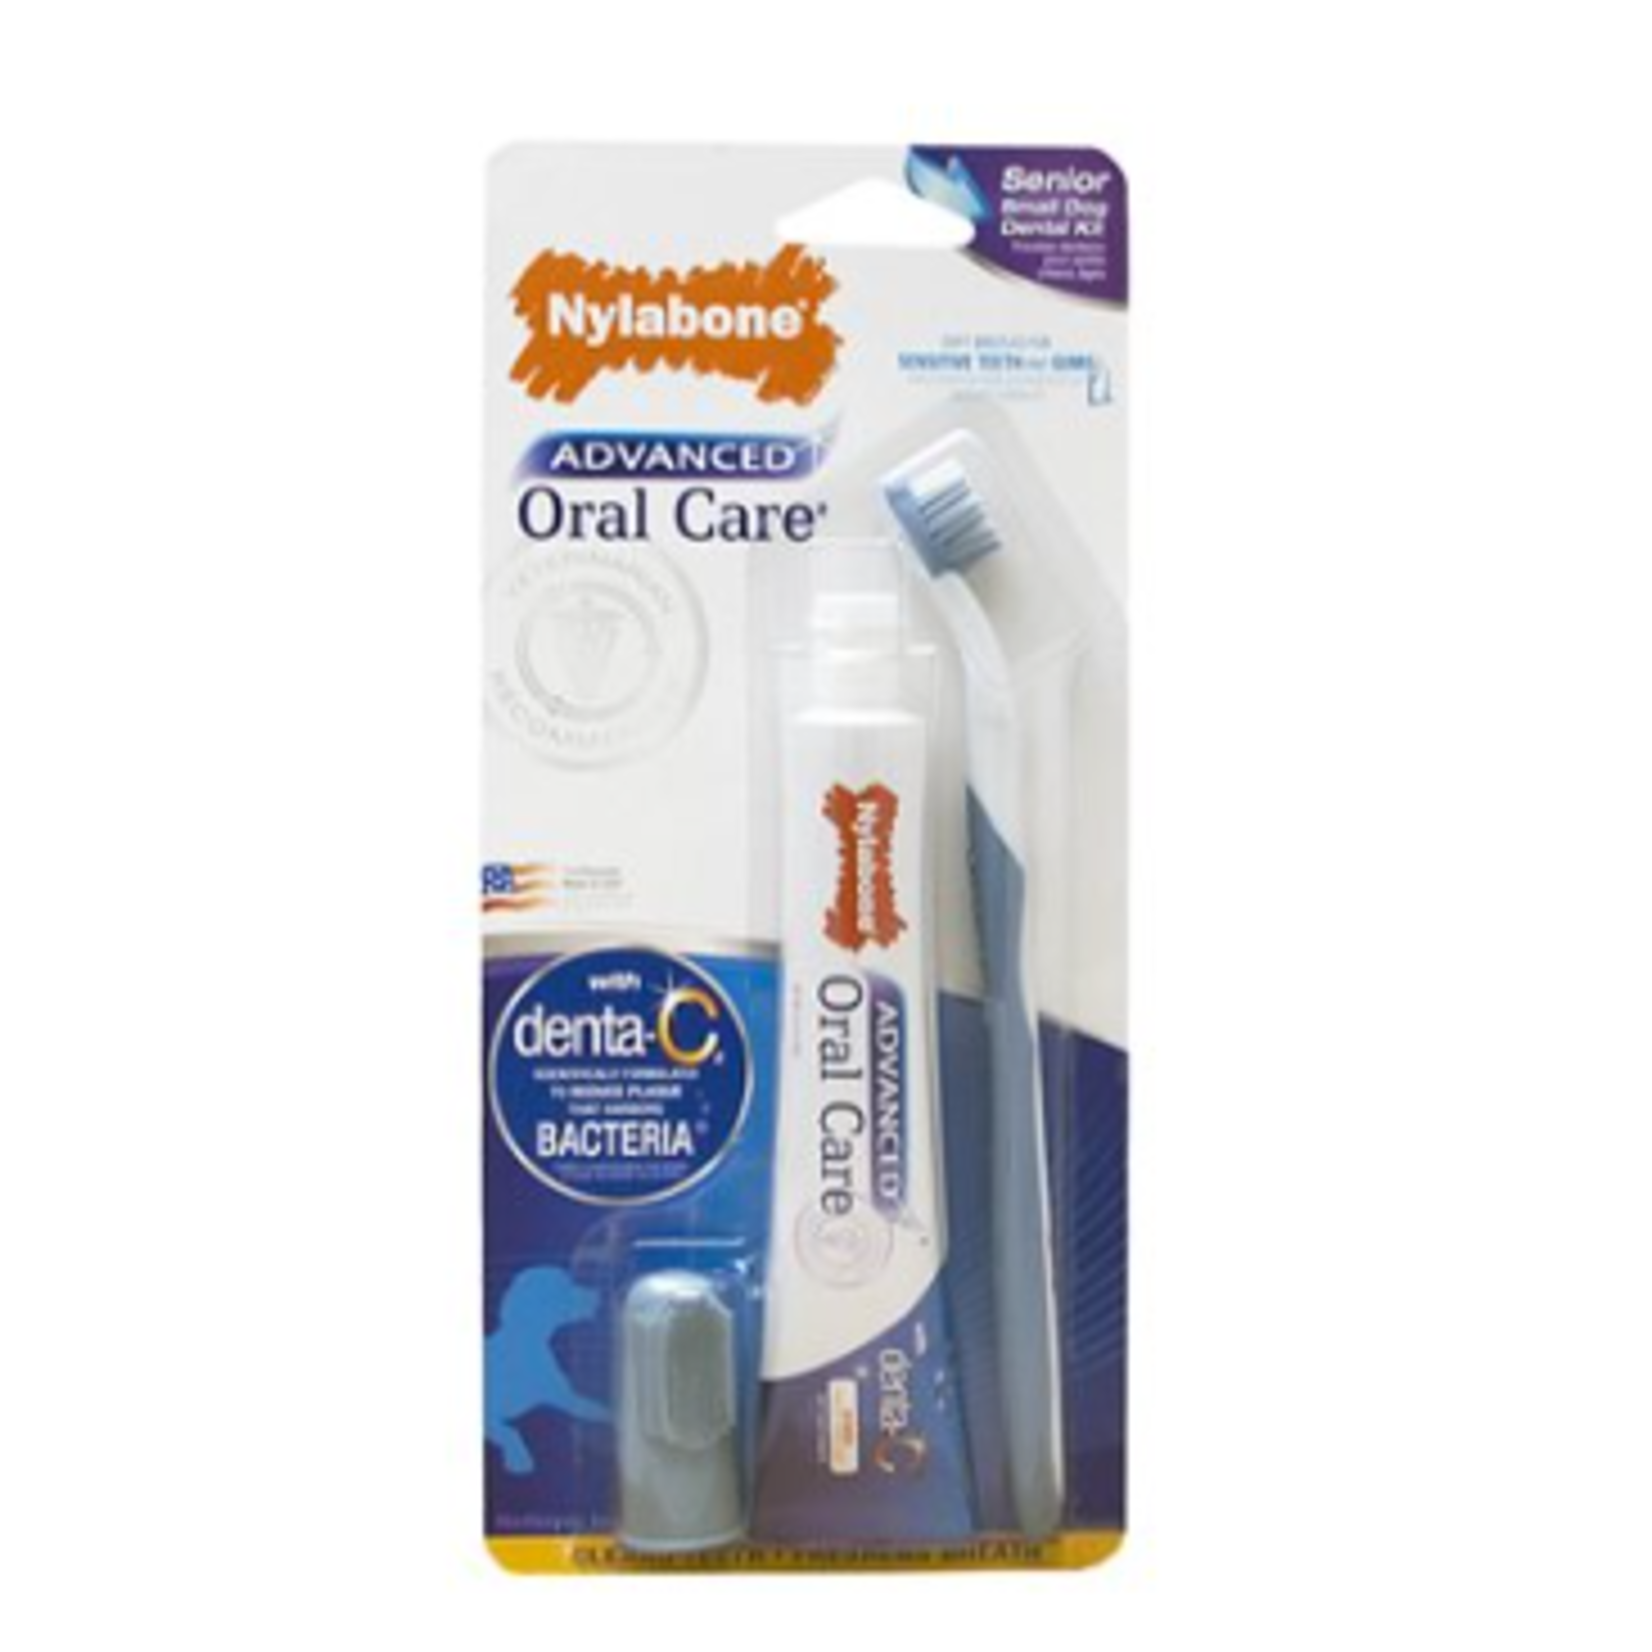 Nylabone Advanced Oral Care - Senior Dog - Dental Kit - Small